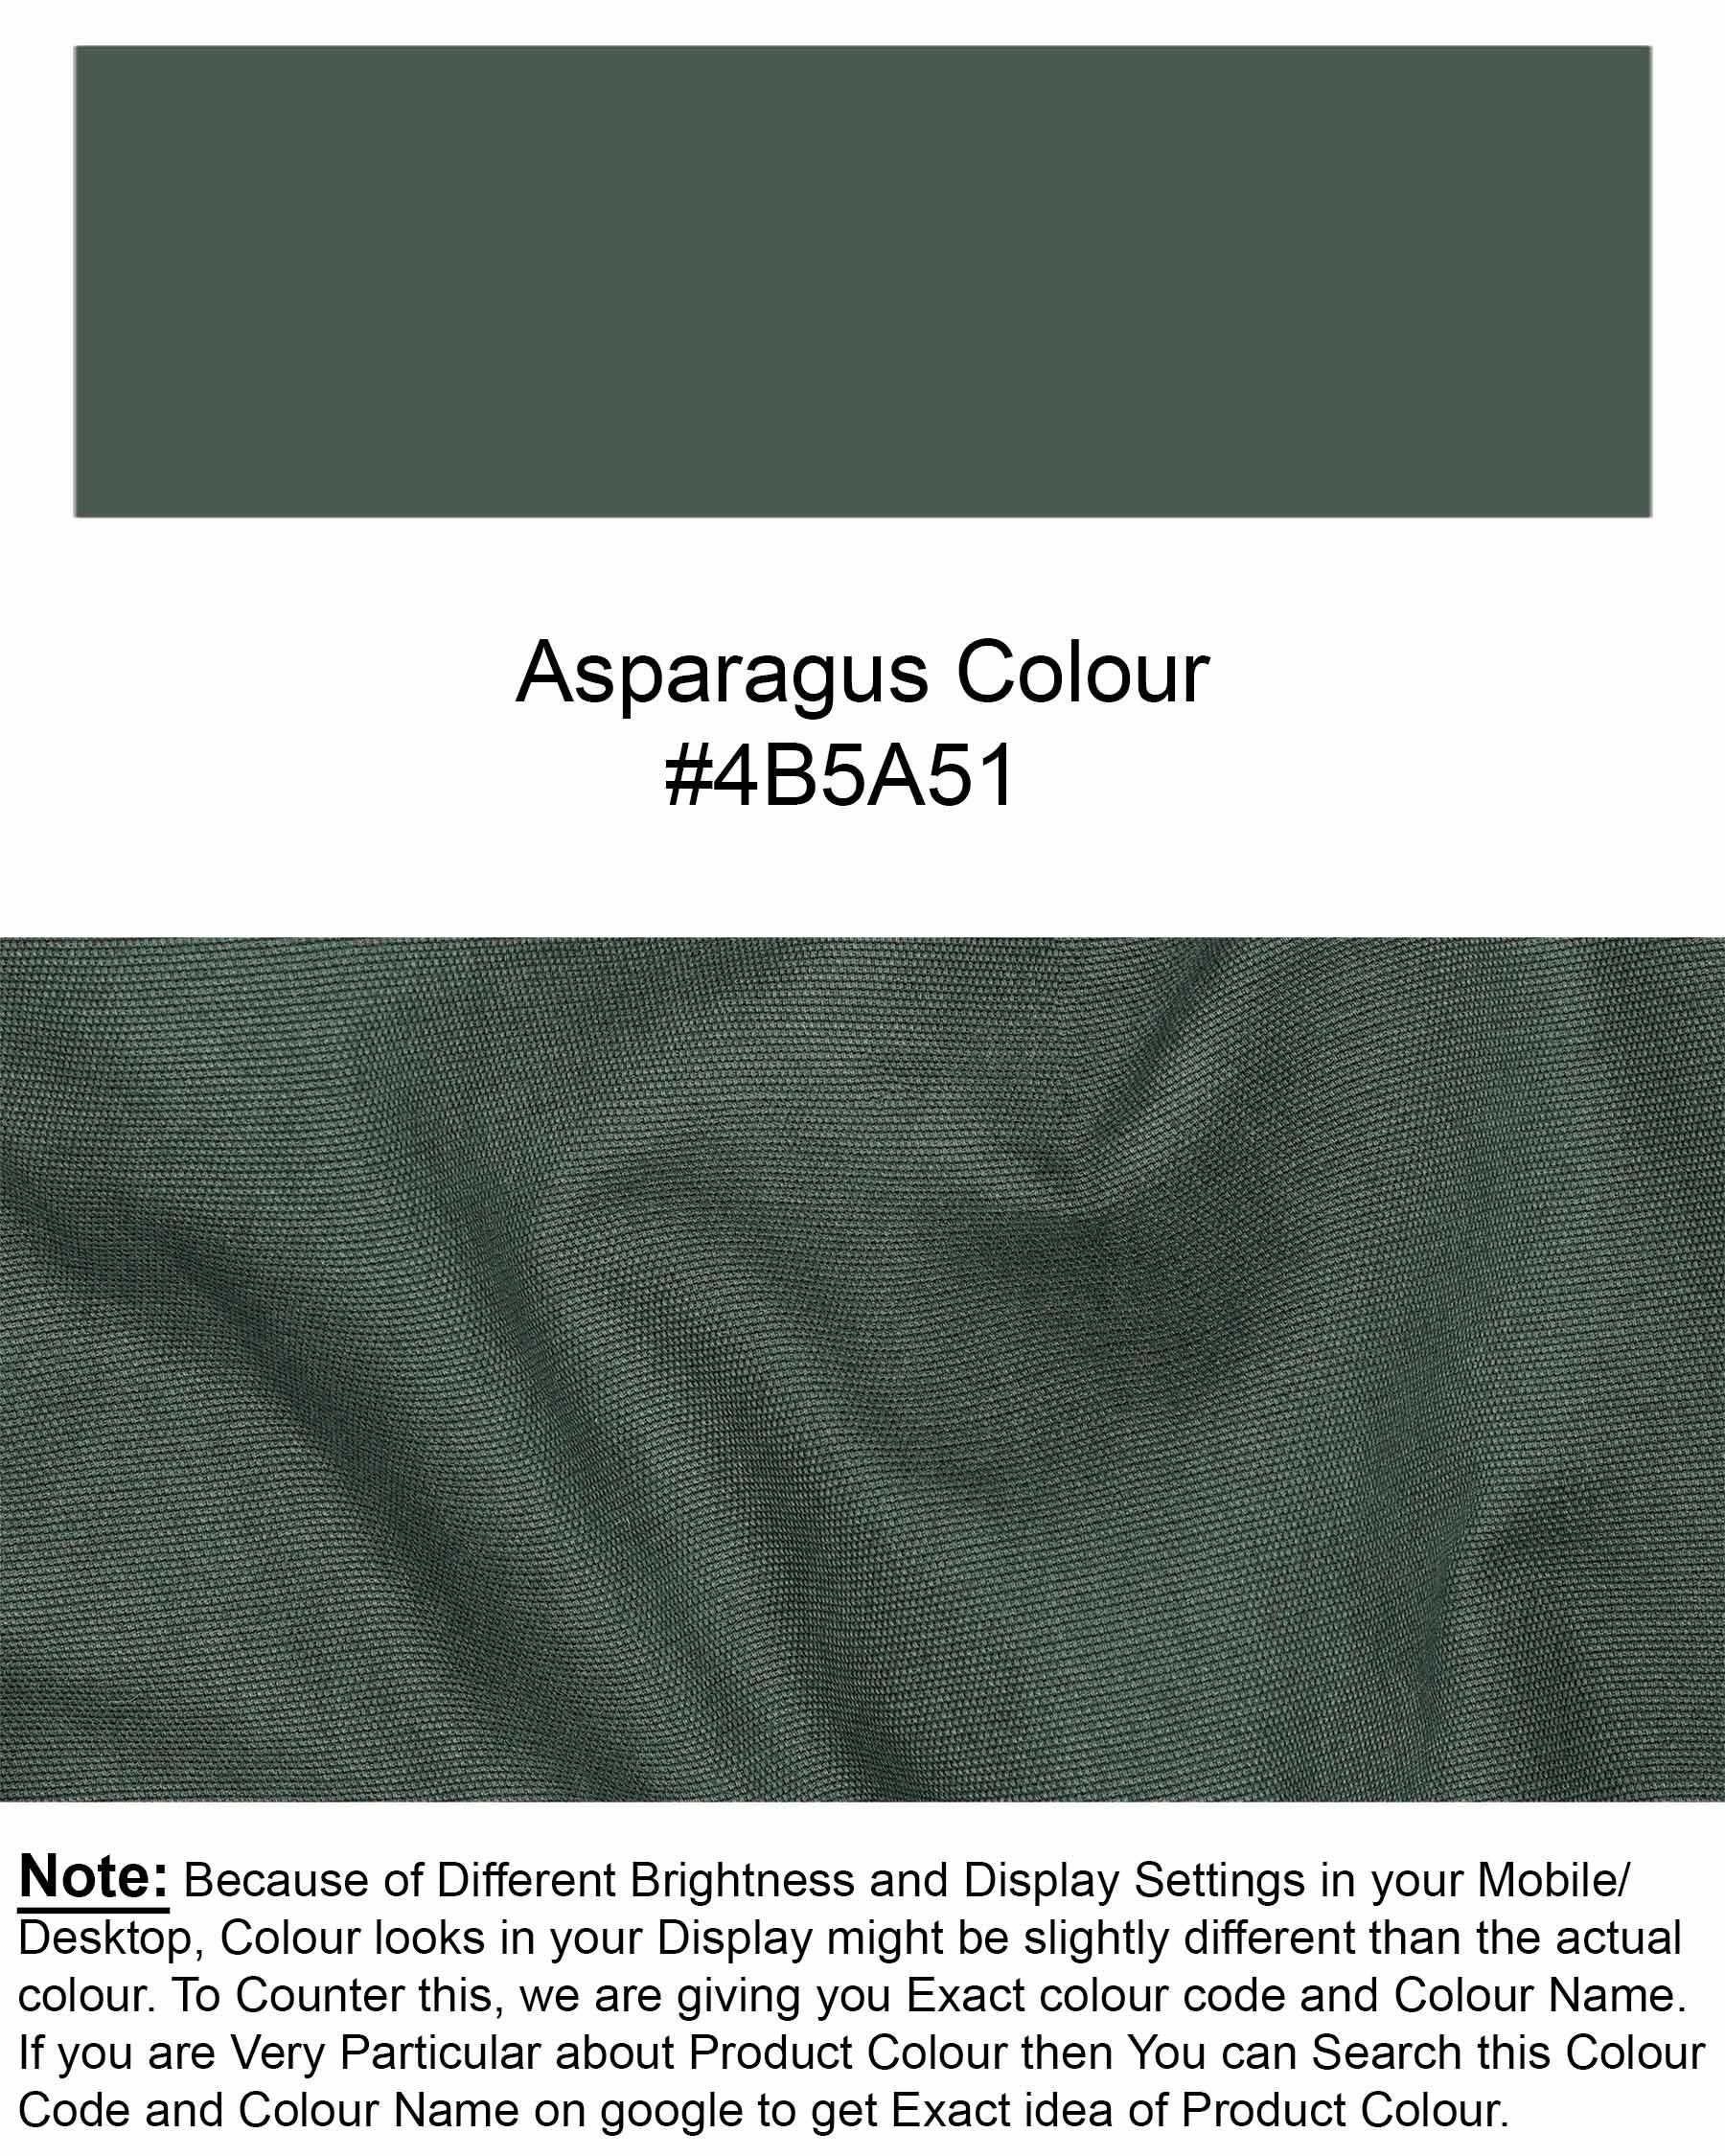 Asparagus Green Cross Buttoned Premium Cotton Bandhgala Suit ST1901-CBG-36, ST1901-CBG-38, ST1901-CBG-40, ST1901-CBG-42, ST1901-CBG-44, ST1901-CBG-46, ST1901-CBG-48, ST1901-CBG-50, ST1901-CBG-52, ST1901-CBG-54, ST1901-CBG-56, ST1901-CBG-58, ST1901-CBG-60